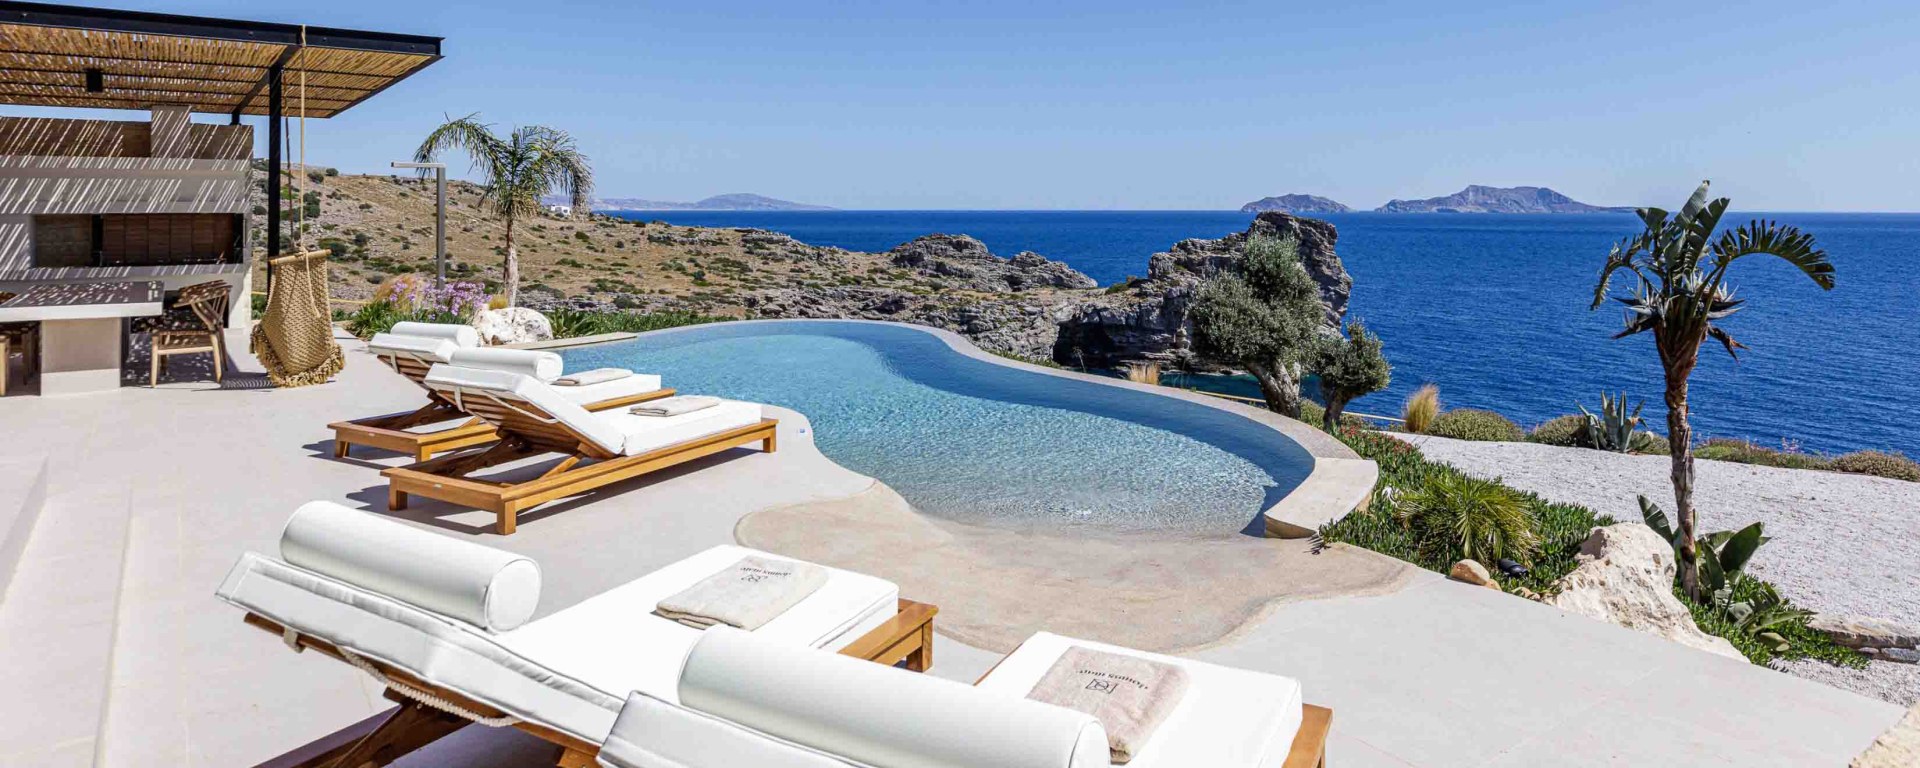 Luxus Ferienhaus Kreta Mieten 35